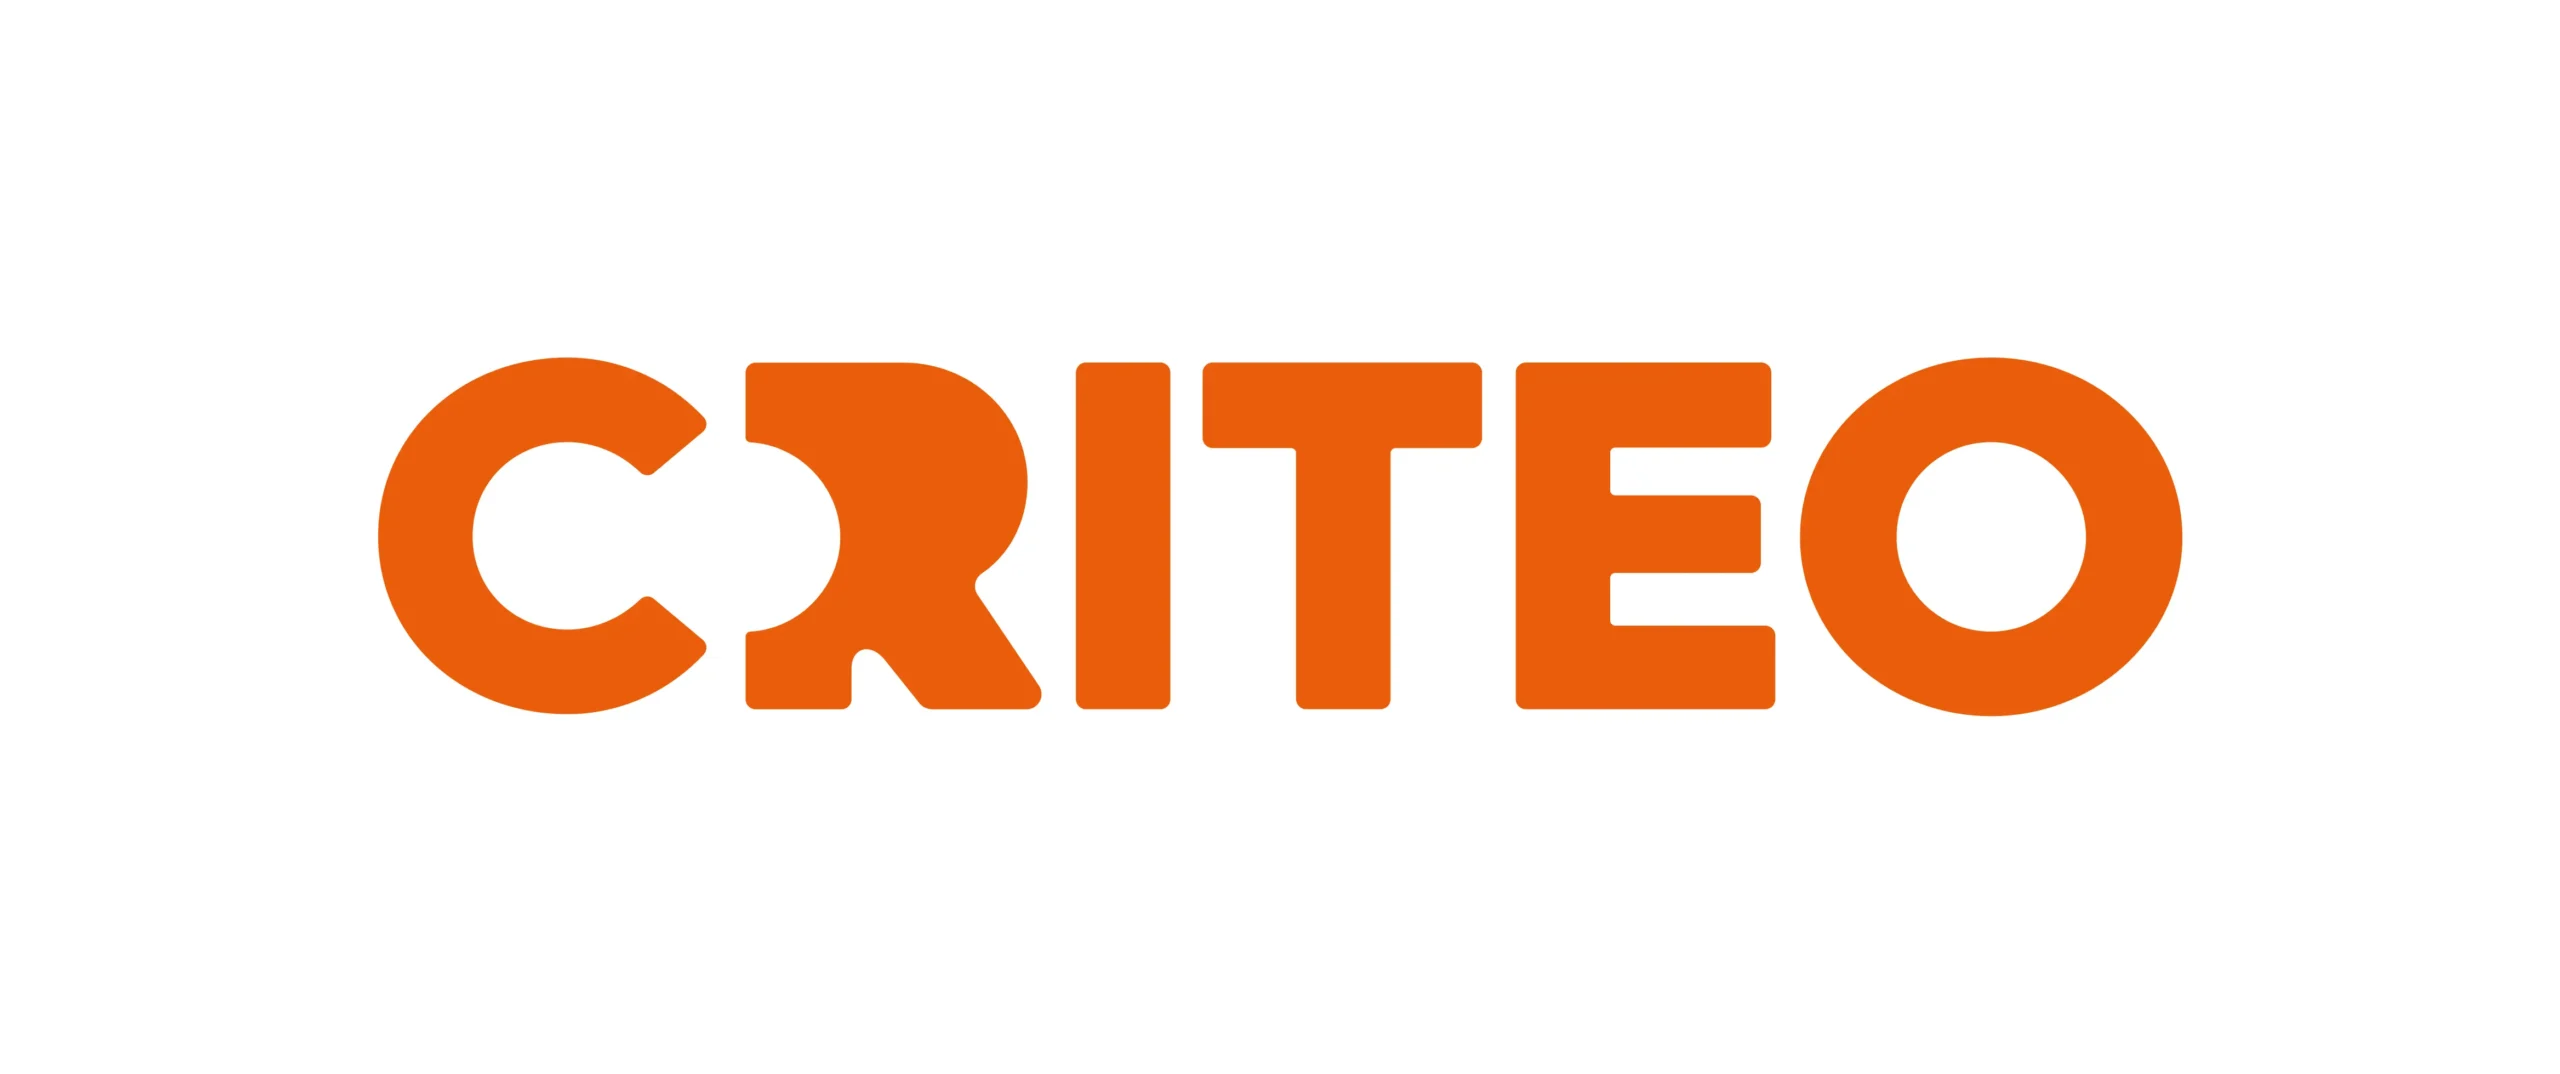 Criteo-logo-sunrise